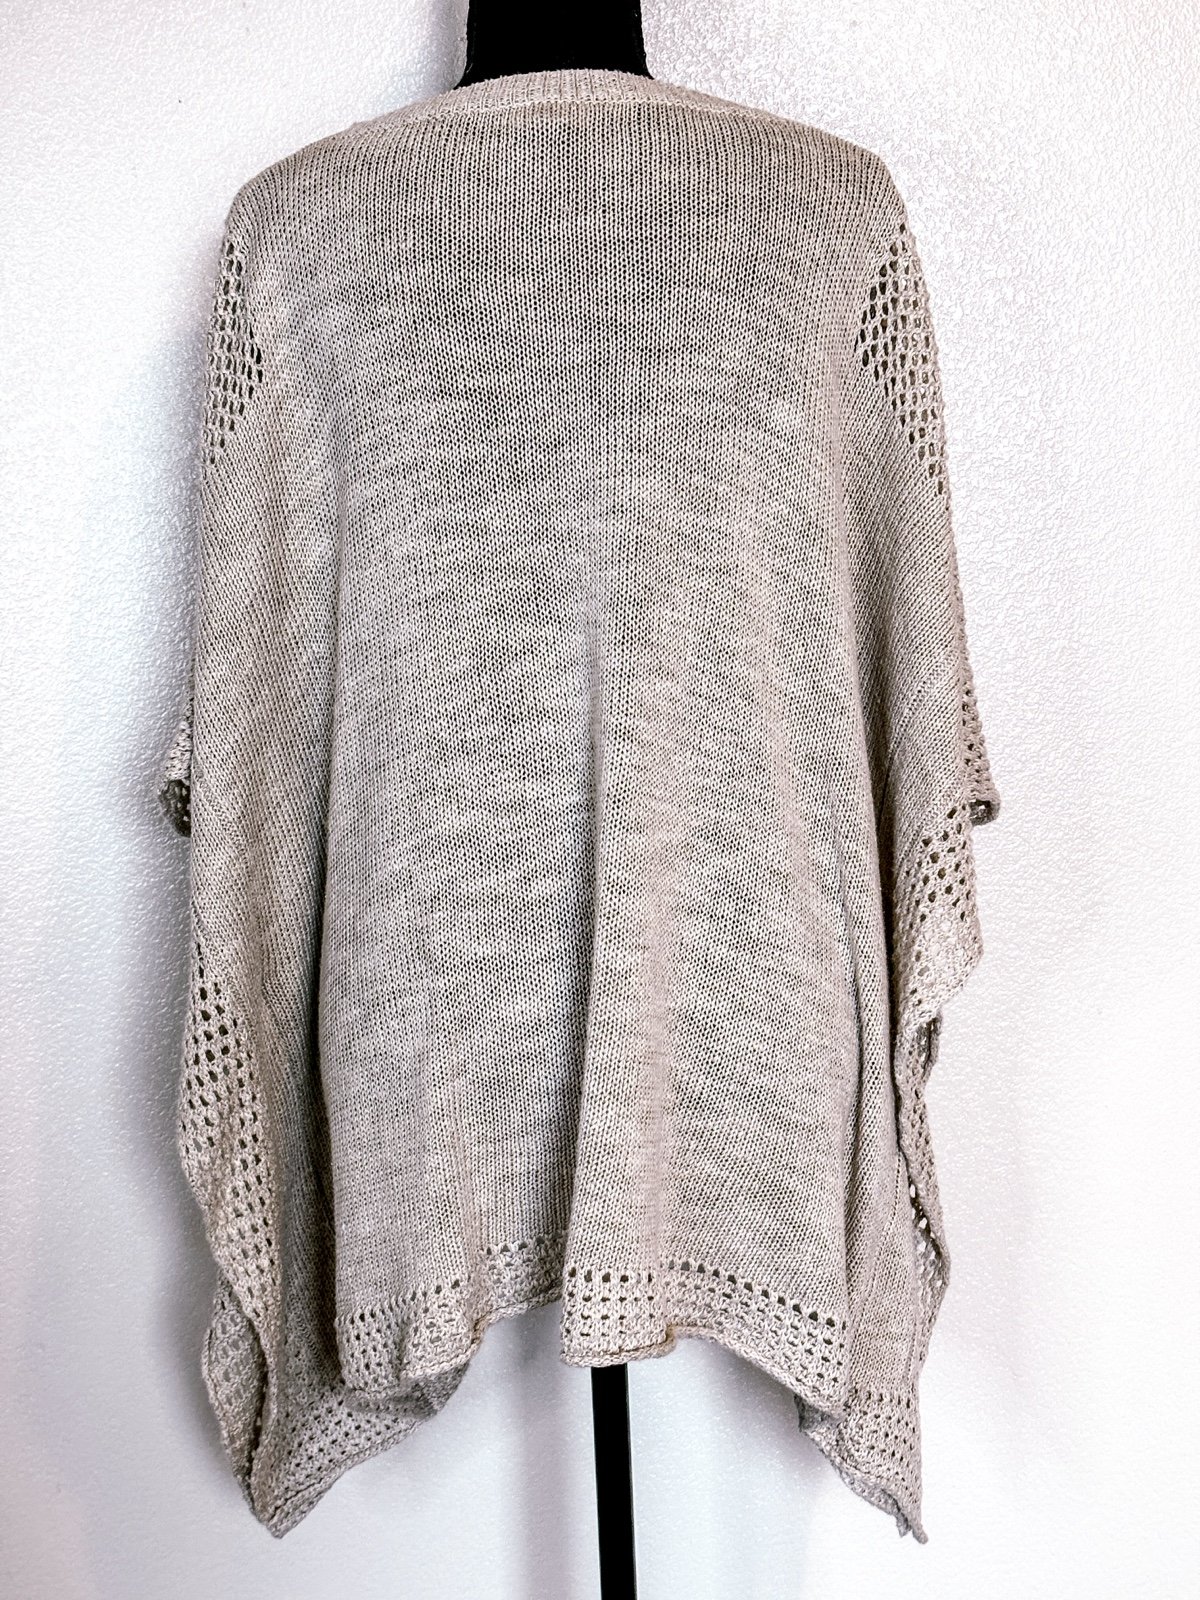 Stylish Chico’s Poncho Sweater Beige Linen Cotton Blend Size L/XL g3sMmNTXz Great